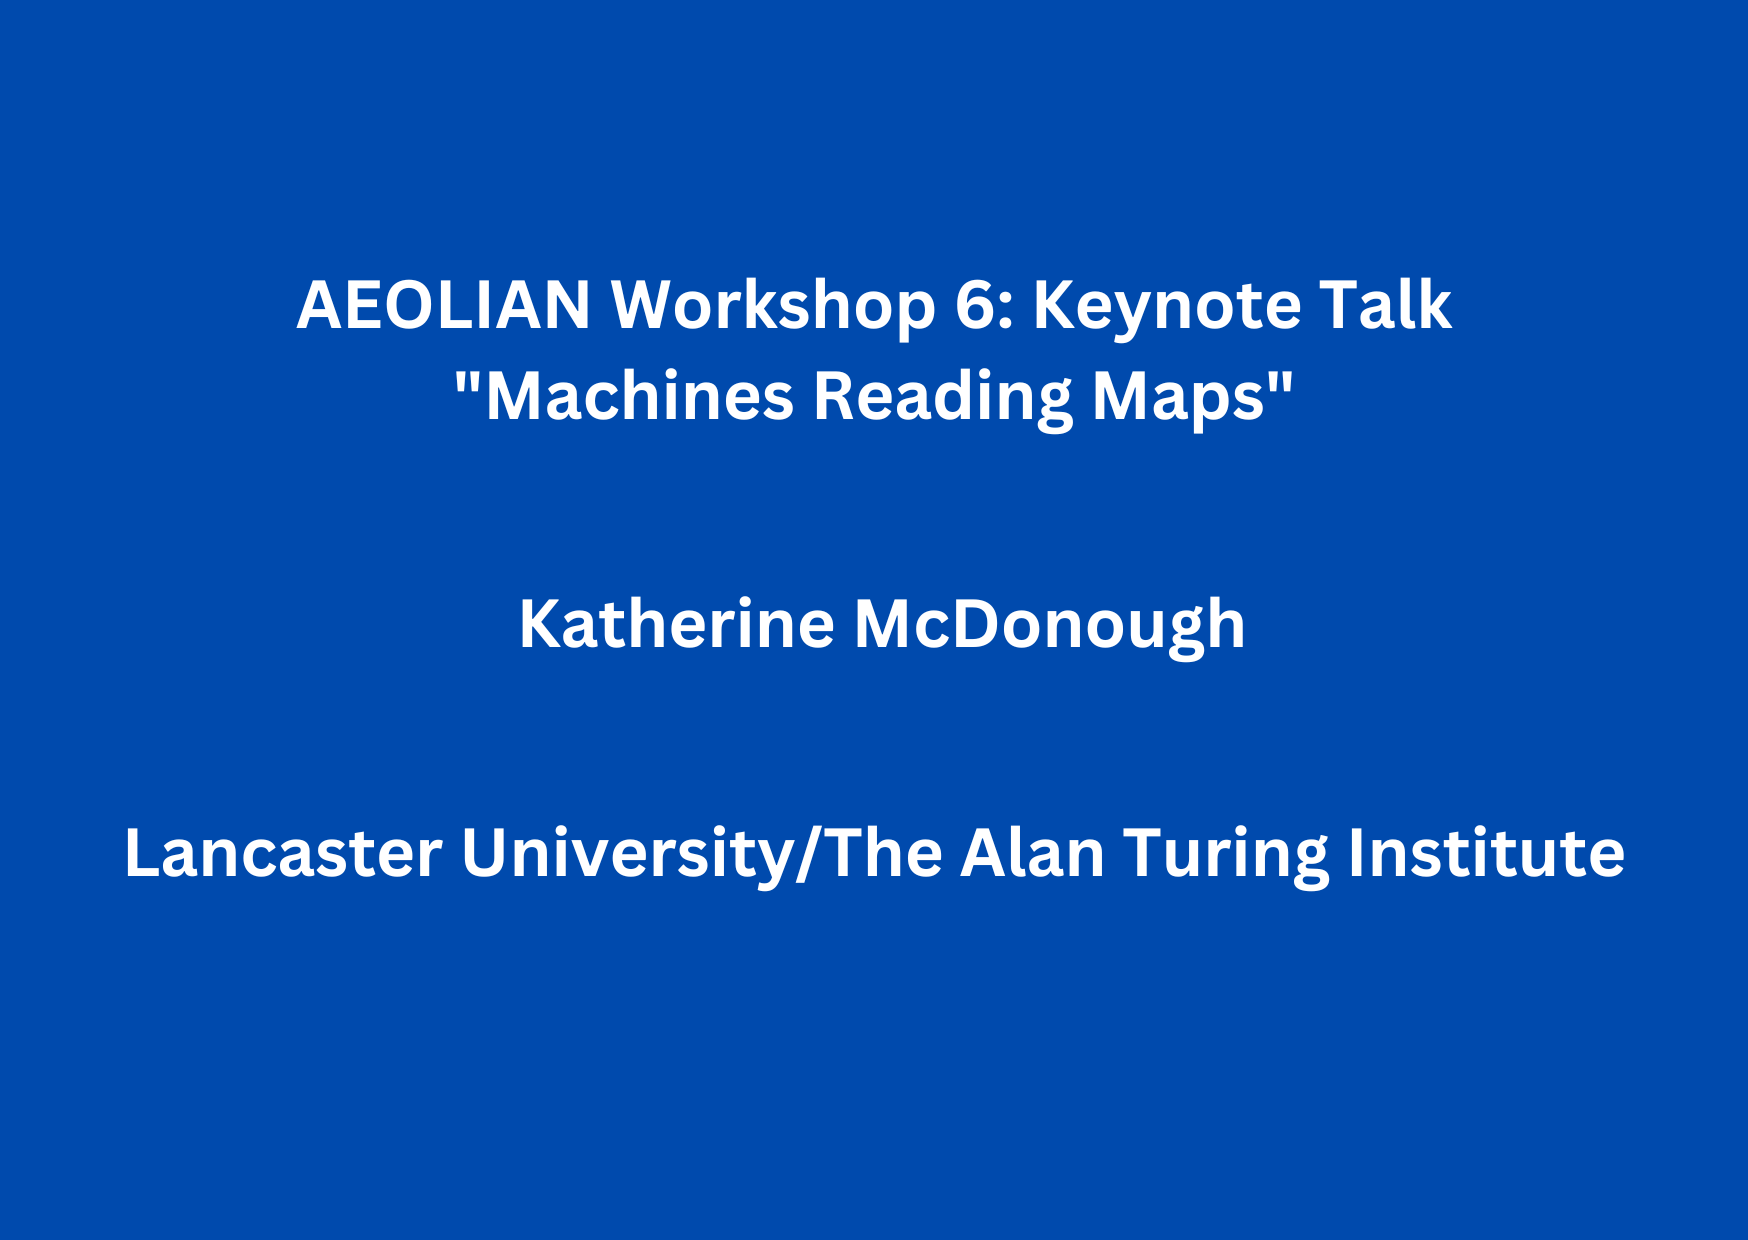 AEOLIAN Workshop 6: Keynote Talk, “Machines Reading Maps” by Dr. Katherine McDonough (Lancaster University/The Alan Turing Institute)